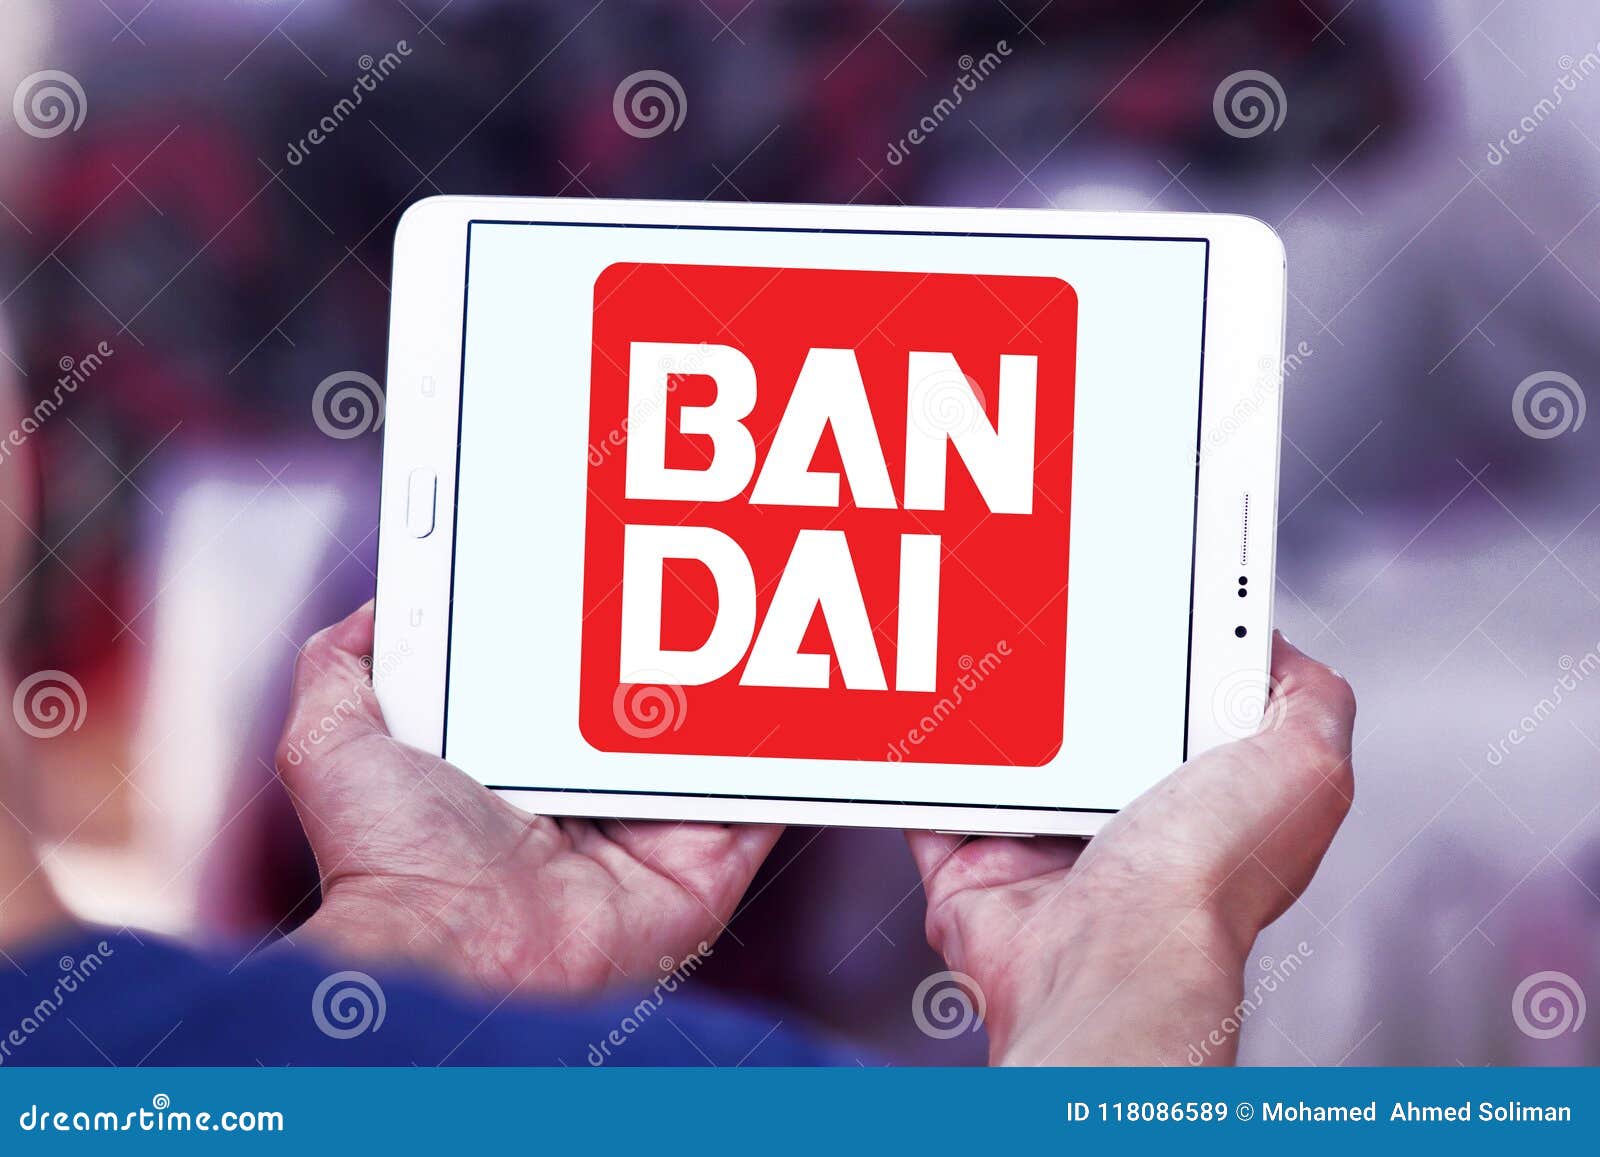 Bandai toy brand logo editorial stock image. Image of game - 118086589